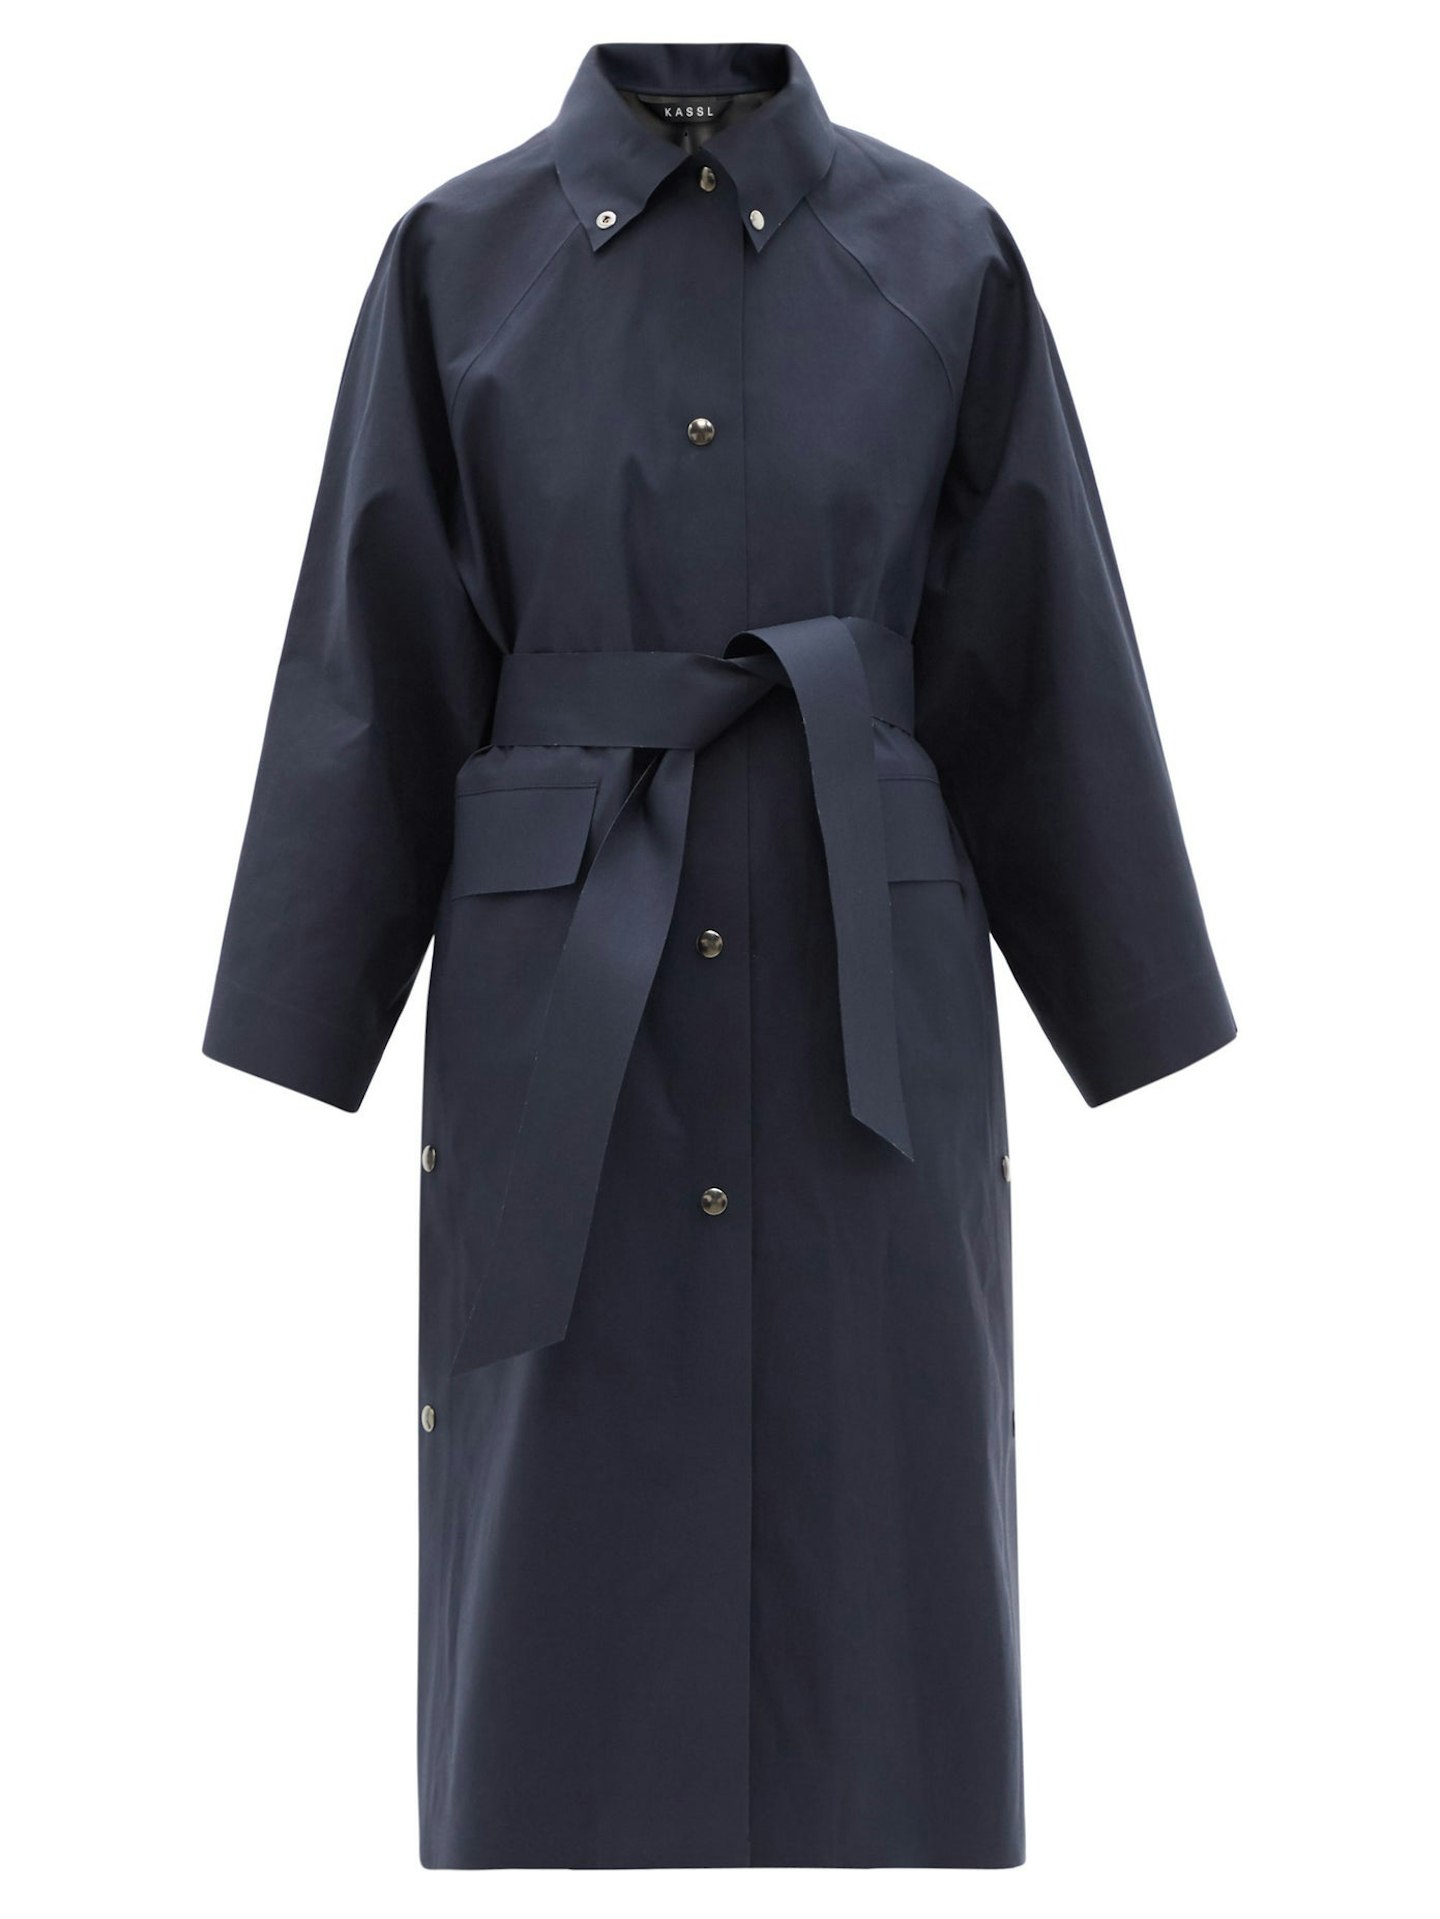 Kassl Editions, Press-stud belted cotton-blend raincoat, £700